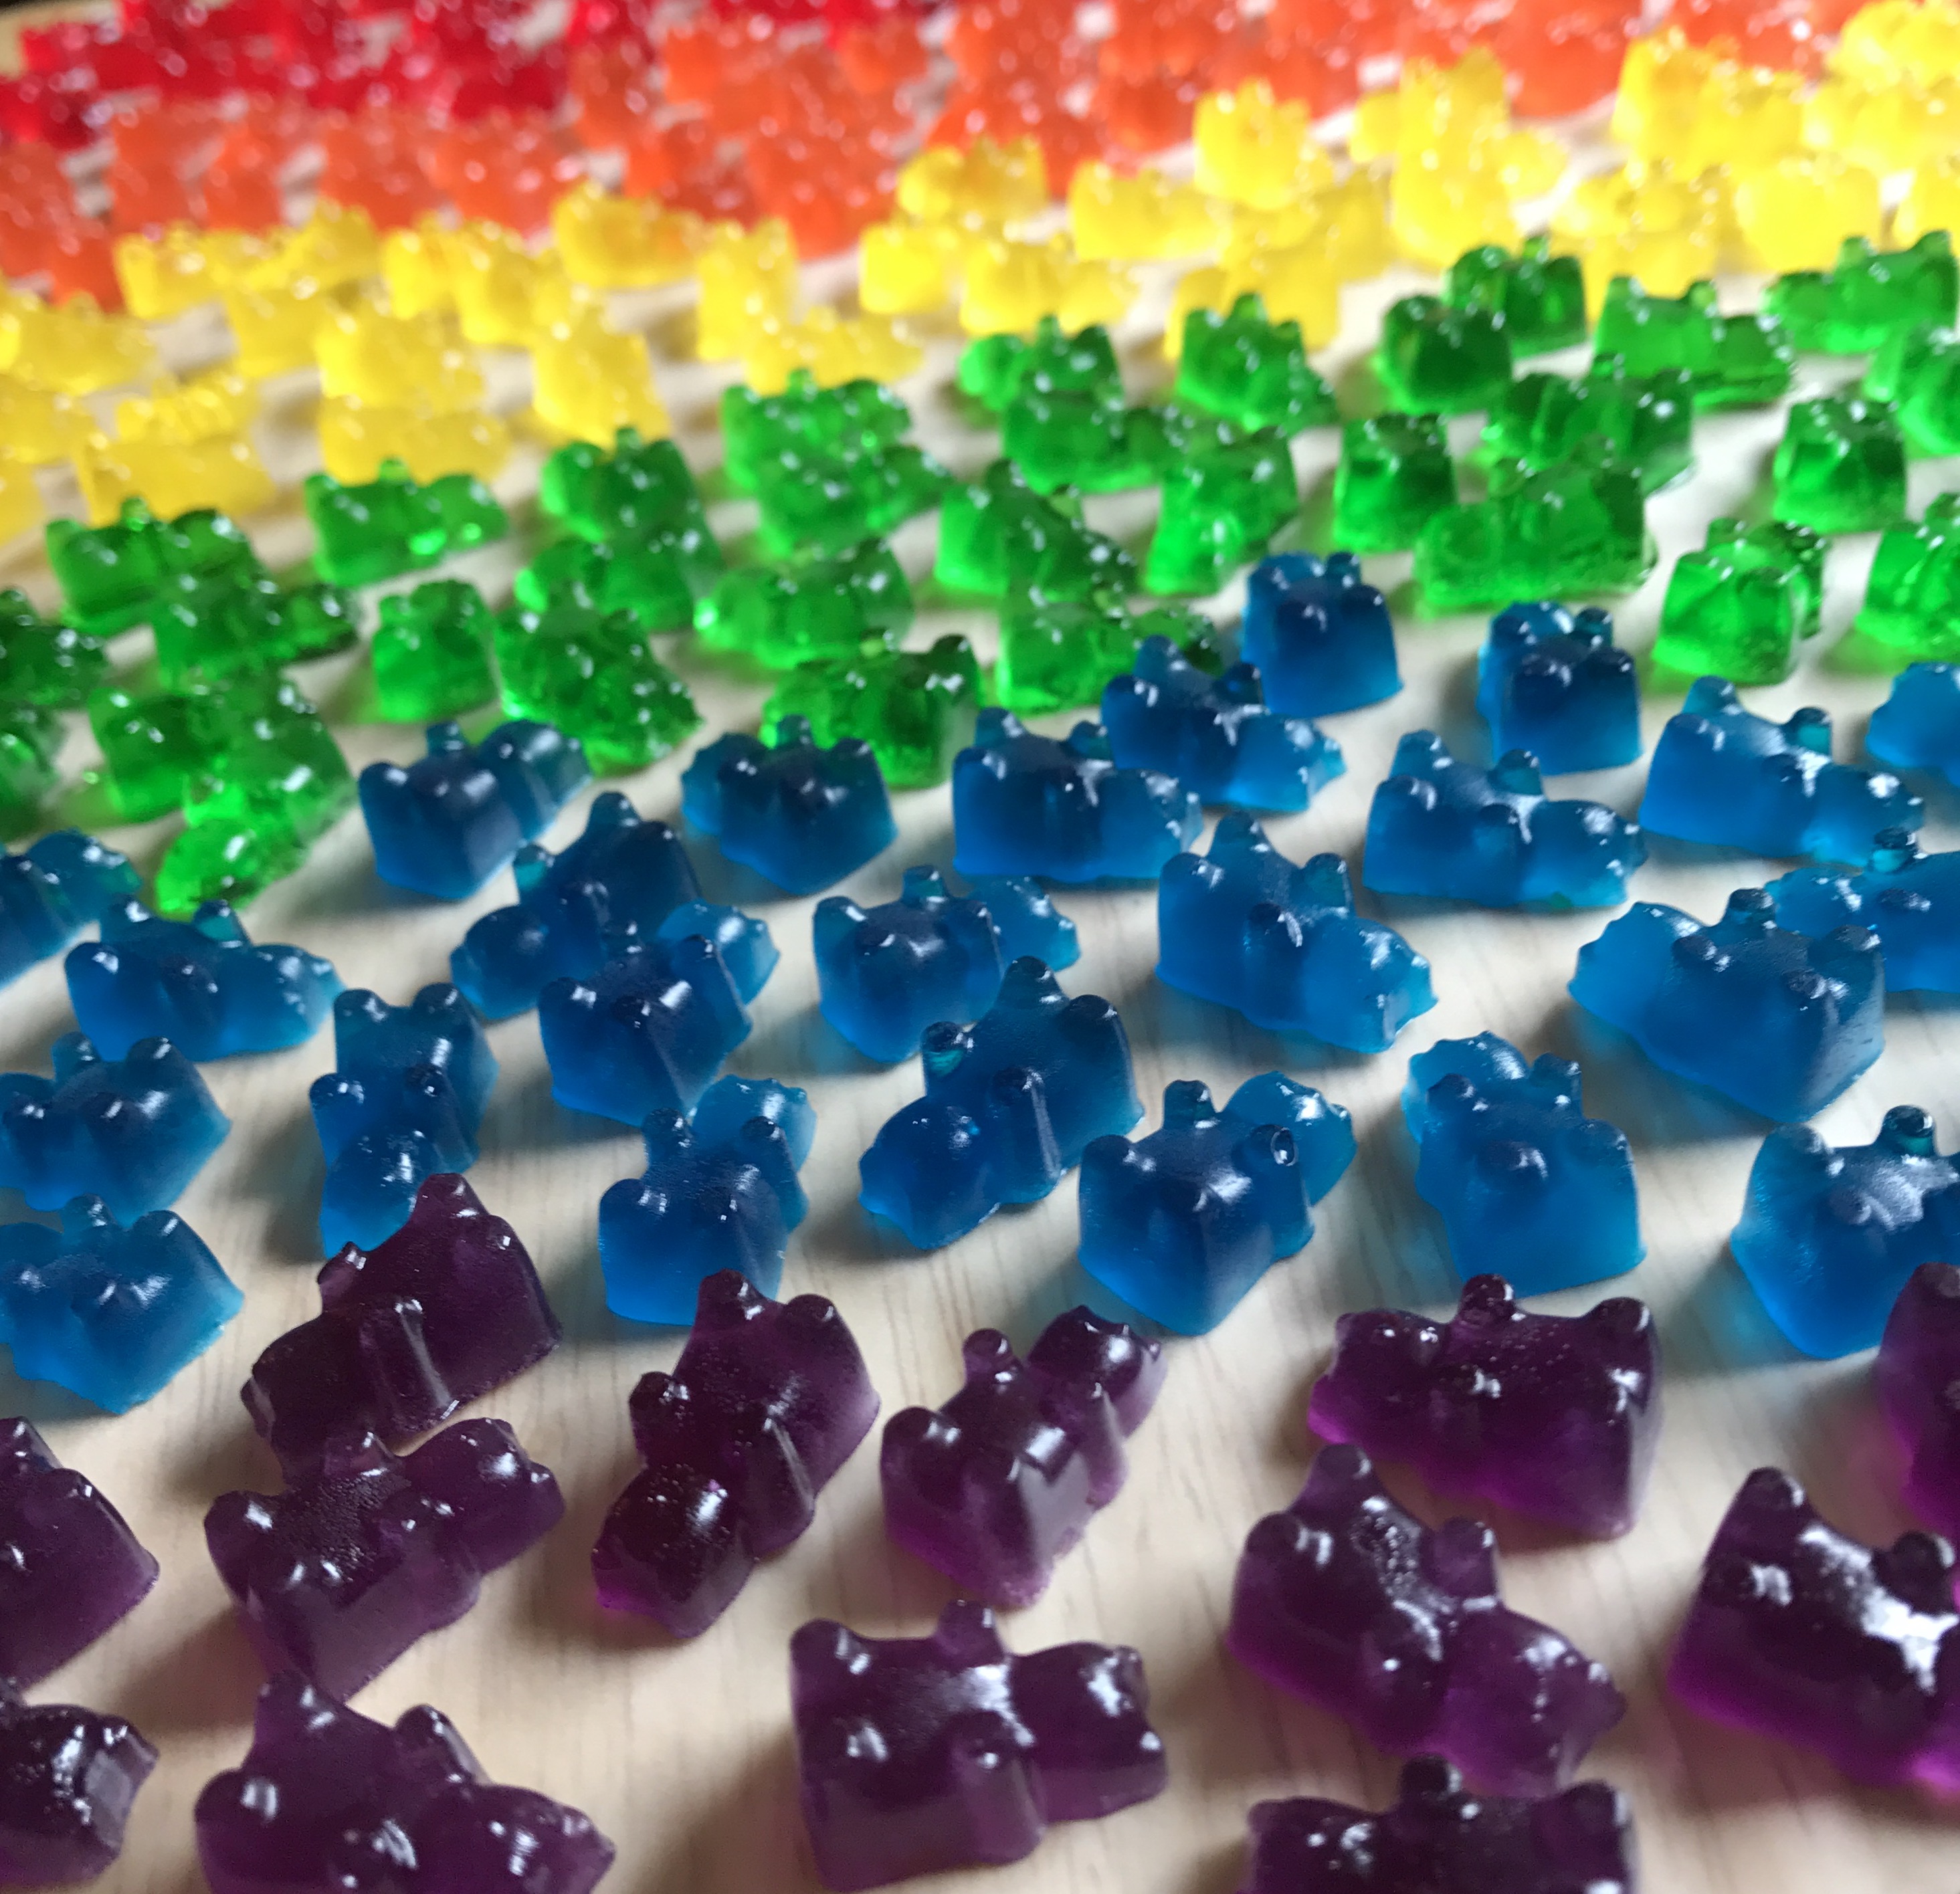 homemade gummy bears arranged in a rainbow pattern